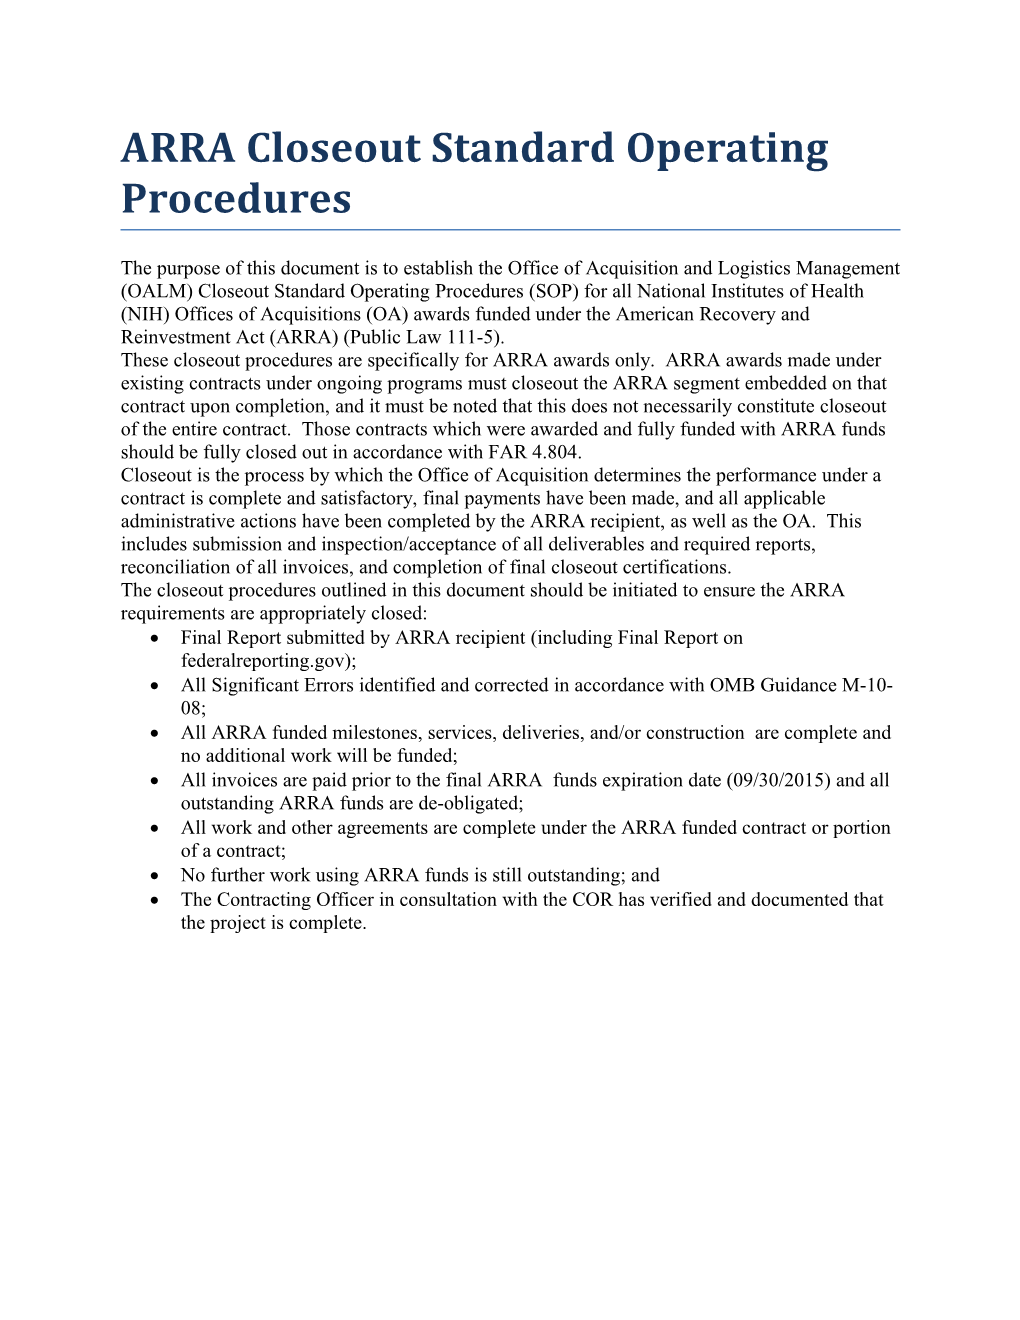 ARRA Closeout Standard Operating Procedures